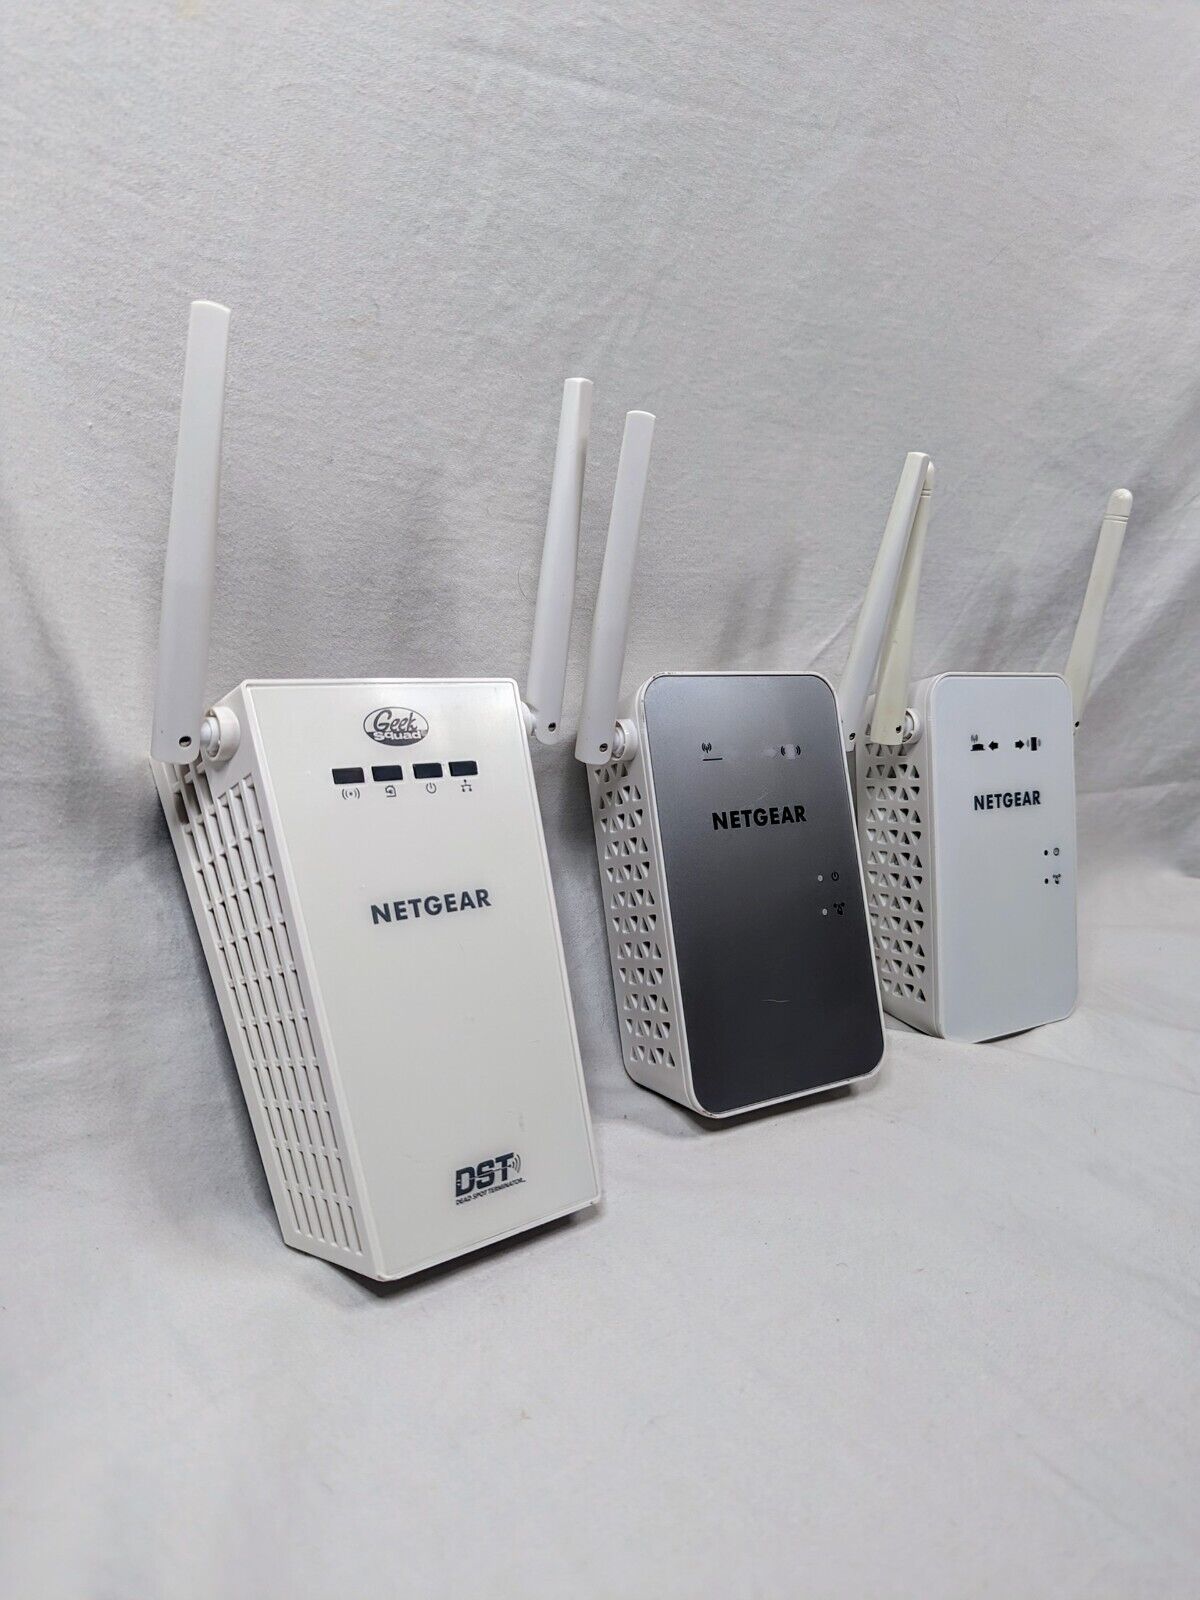 NETGEAR Lot Of 3 WiFi Range Extenders DST6501 EX6150v2 EX6100 Access Point Used